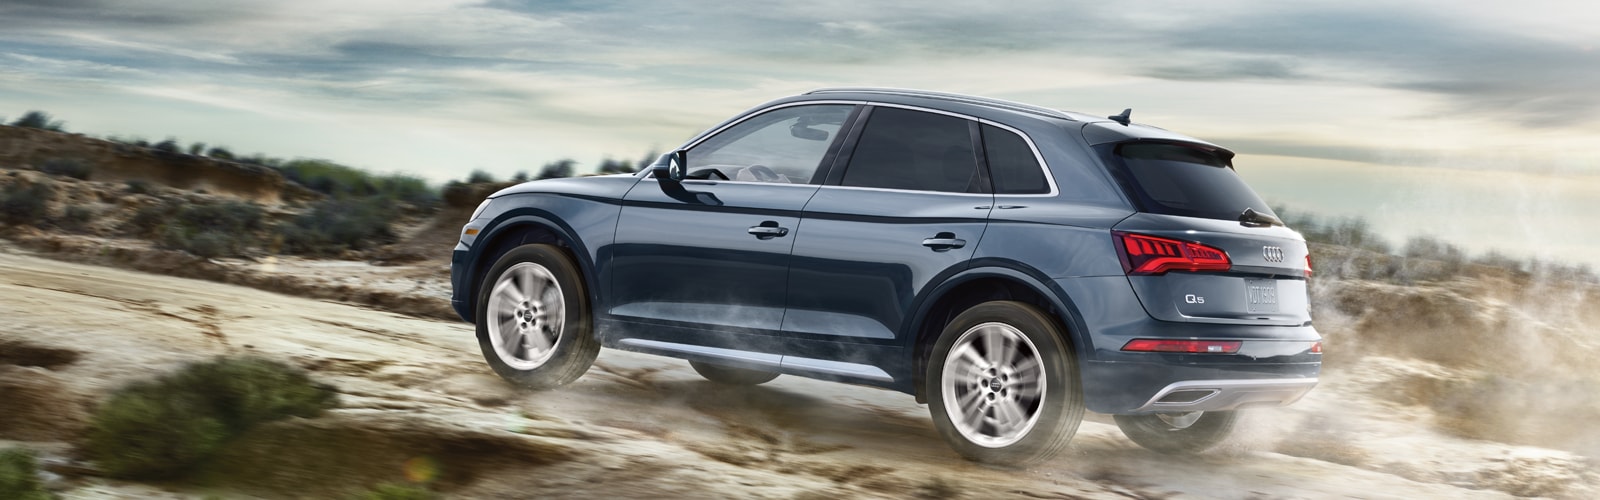 Audi Q5 lease deals NY image